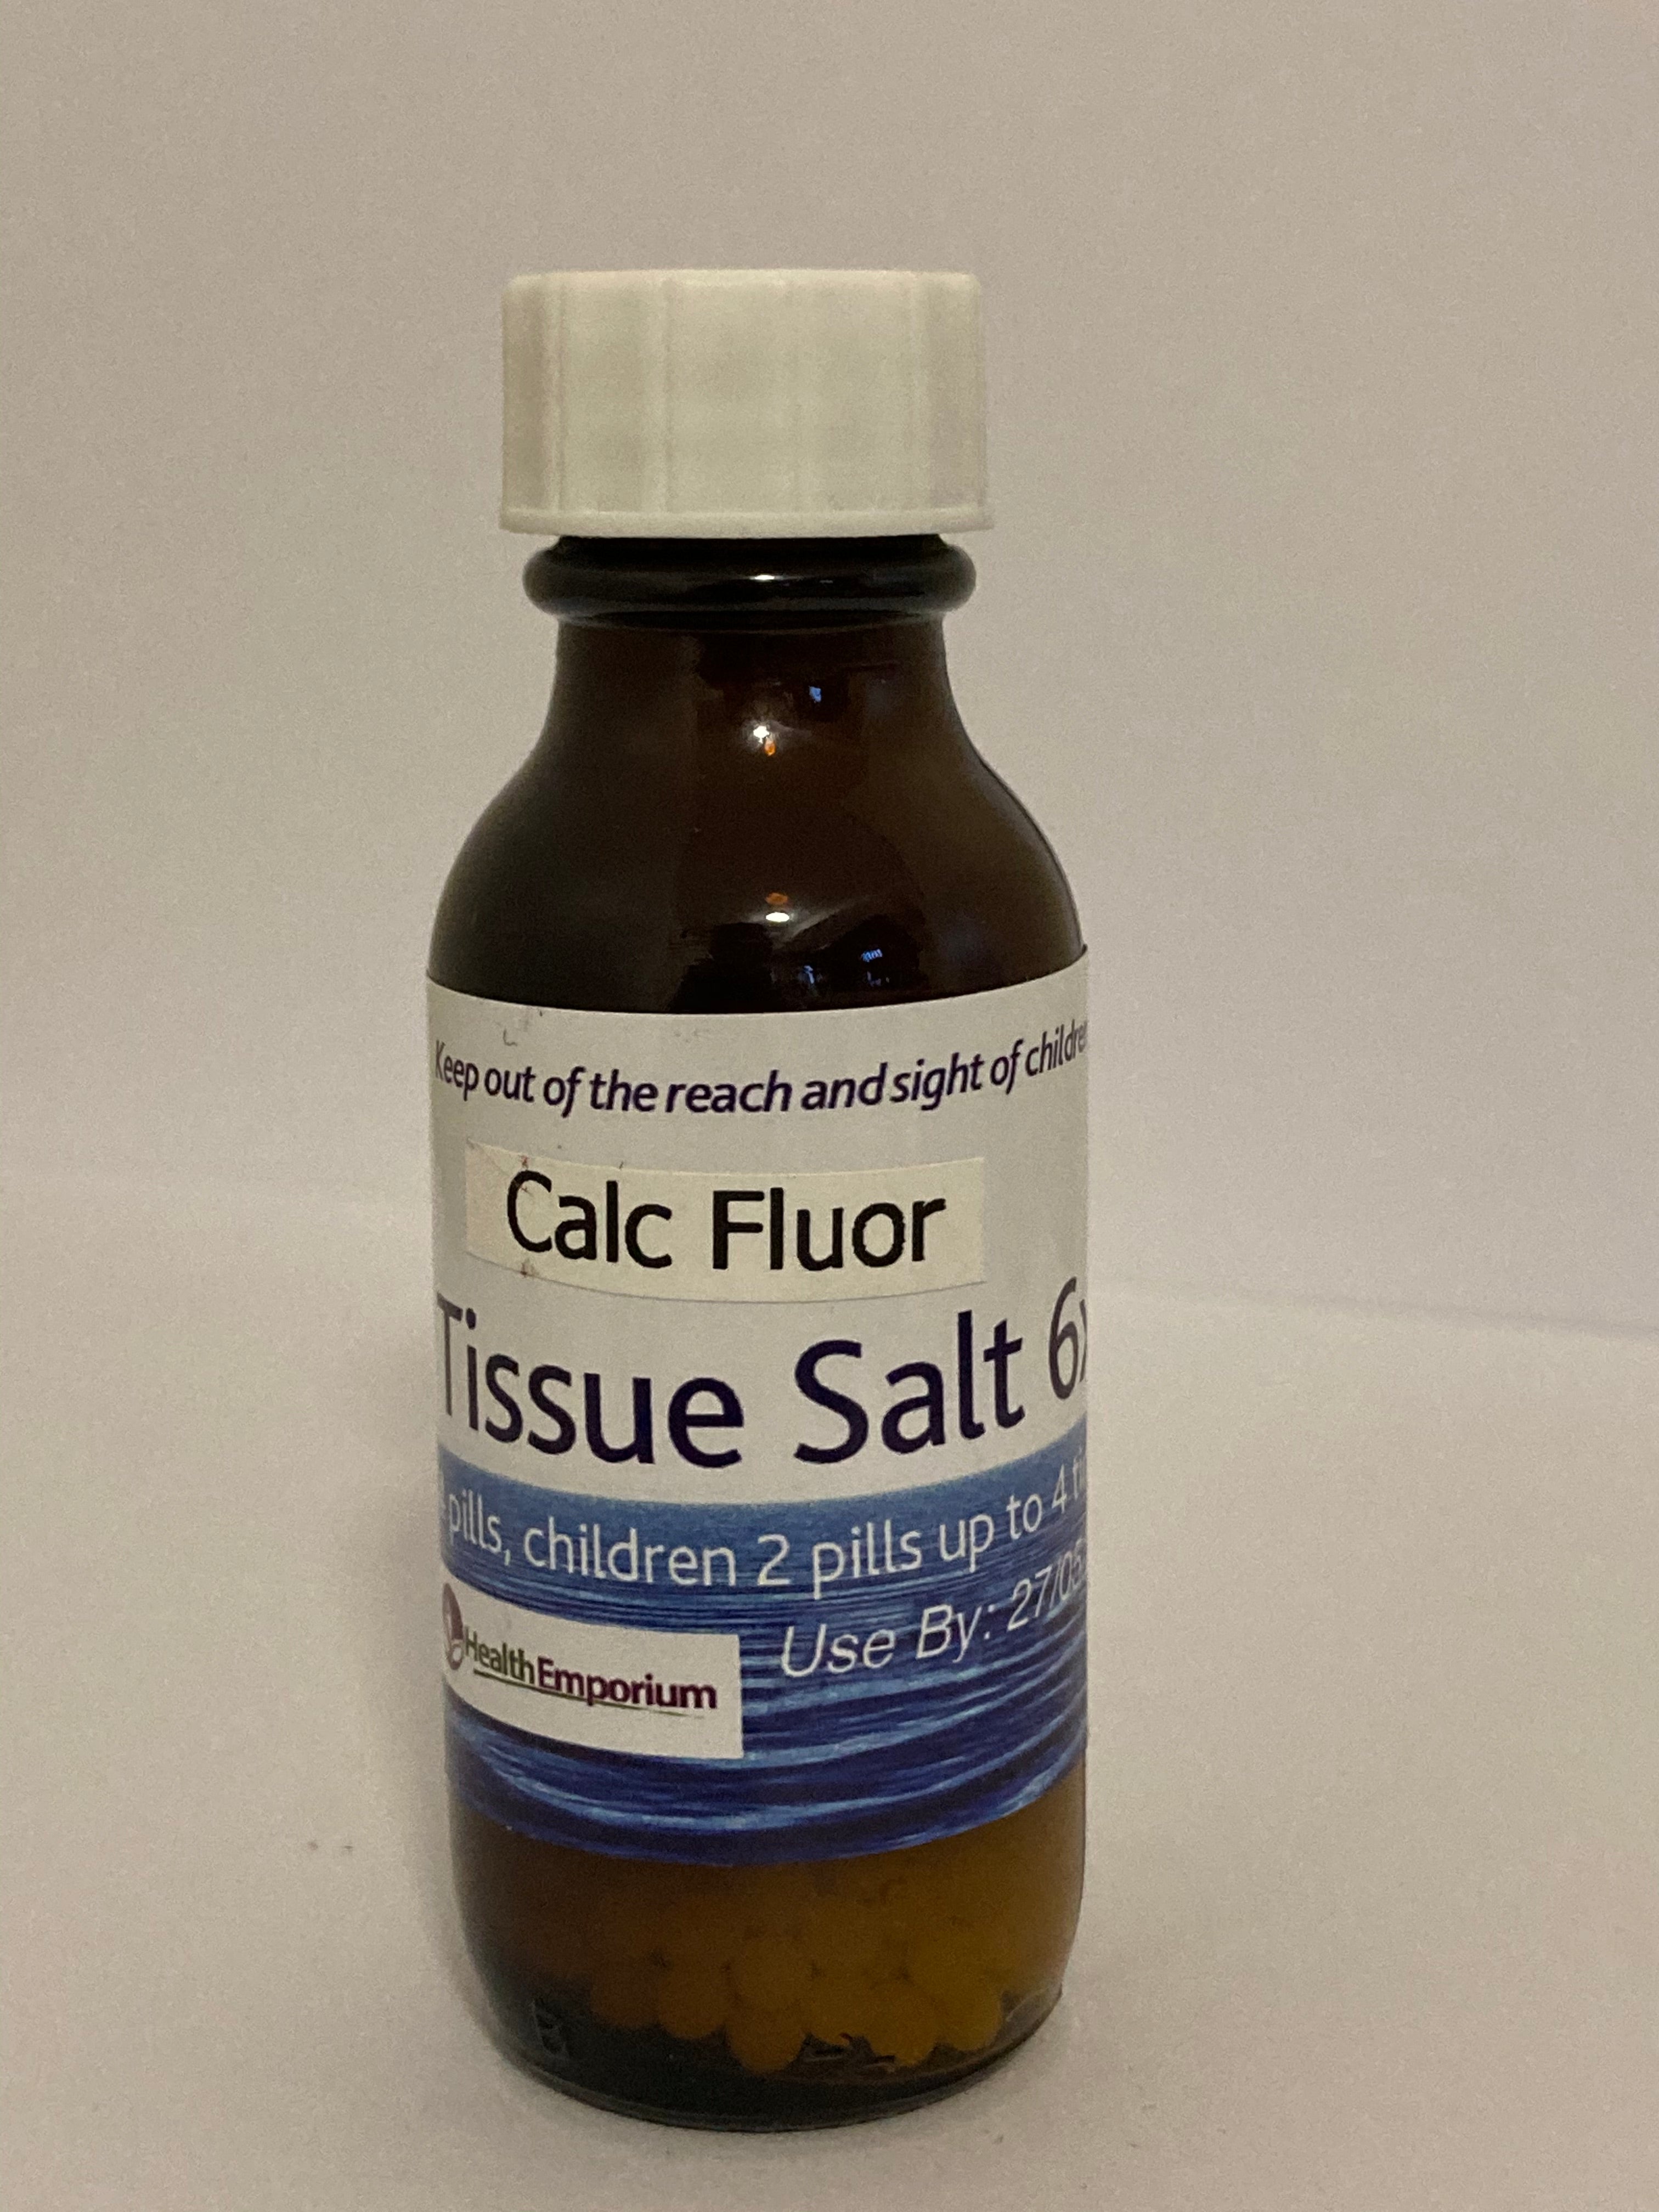 Calc Fluor No 1 Tissue Salt Soft